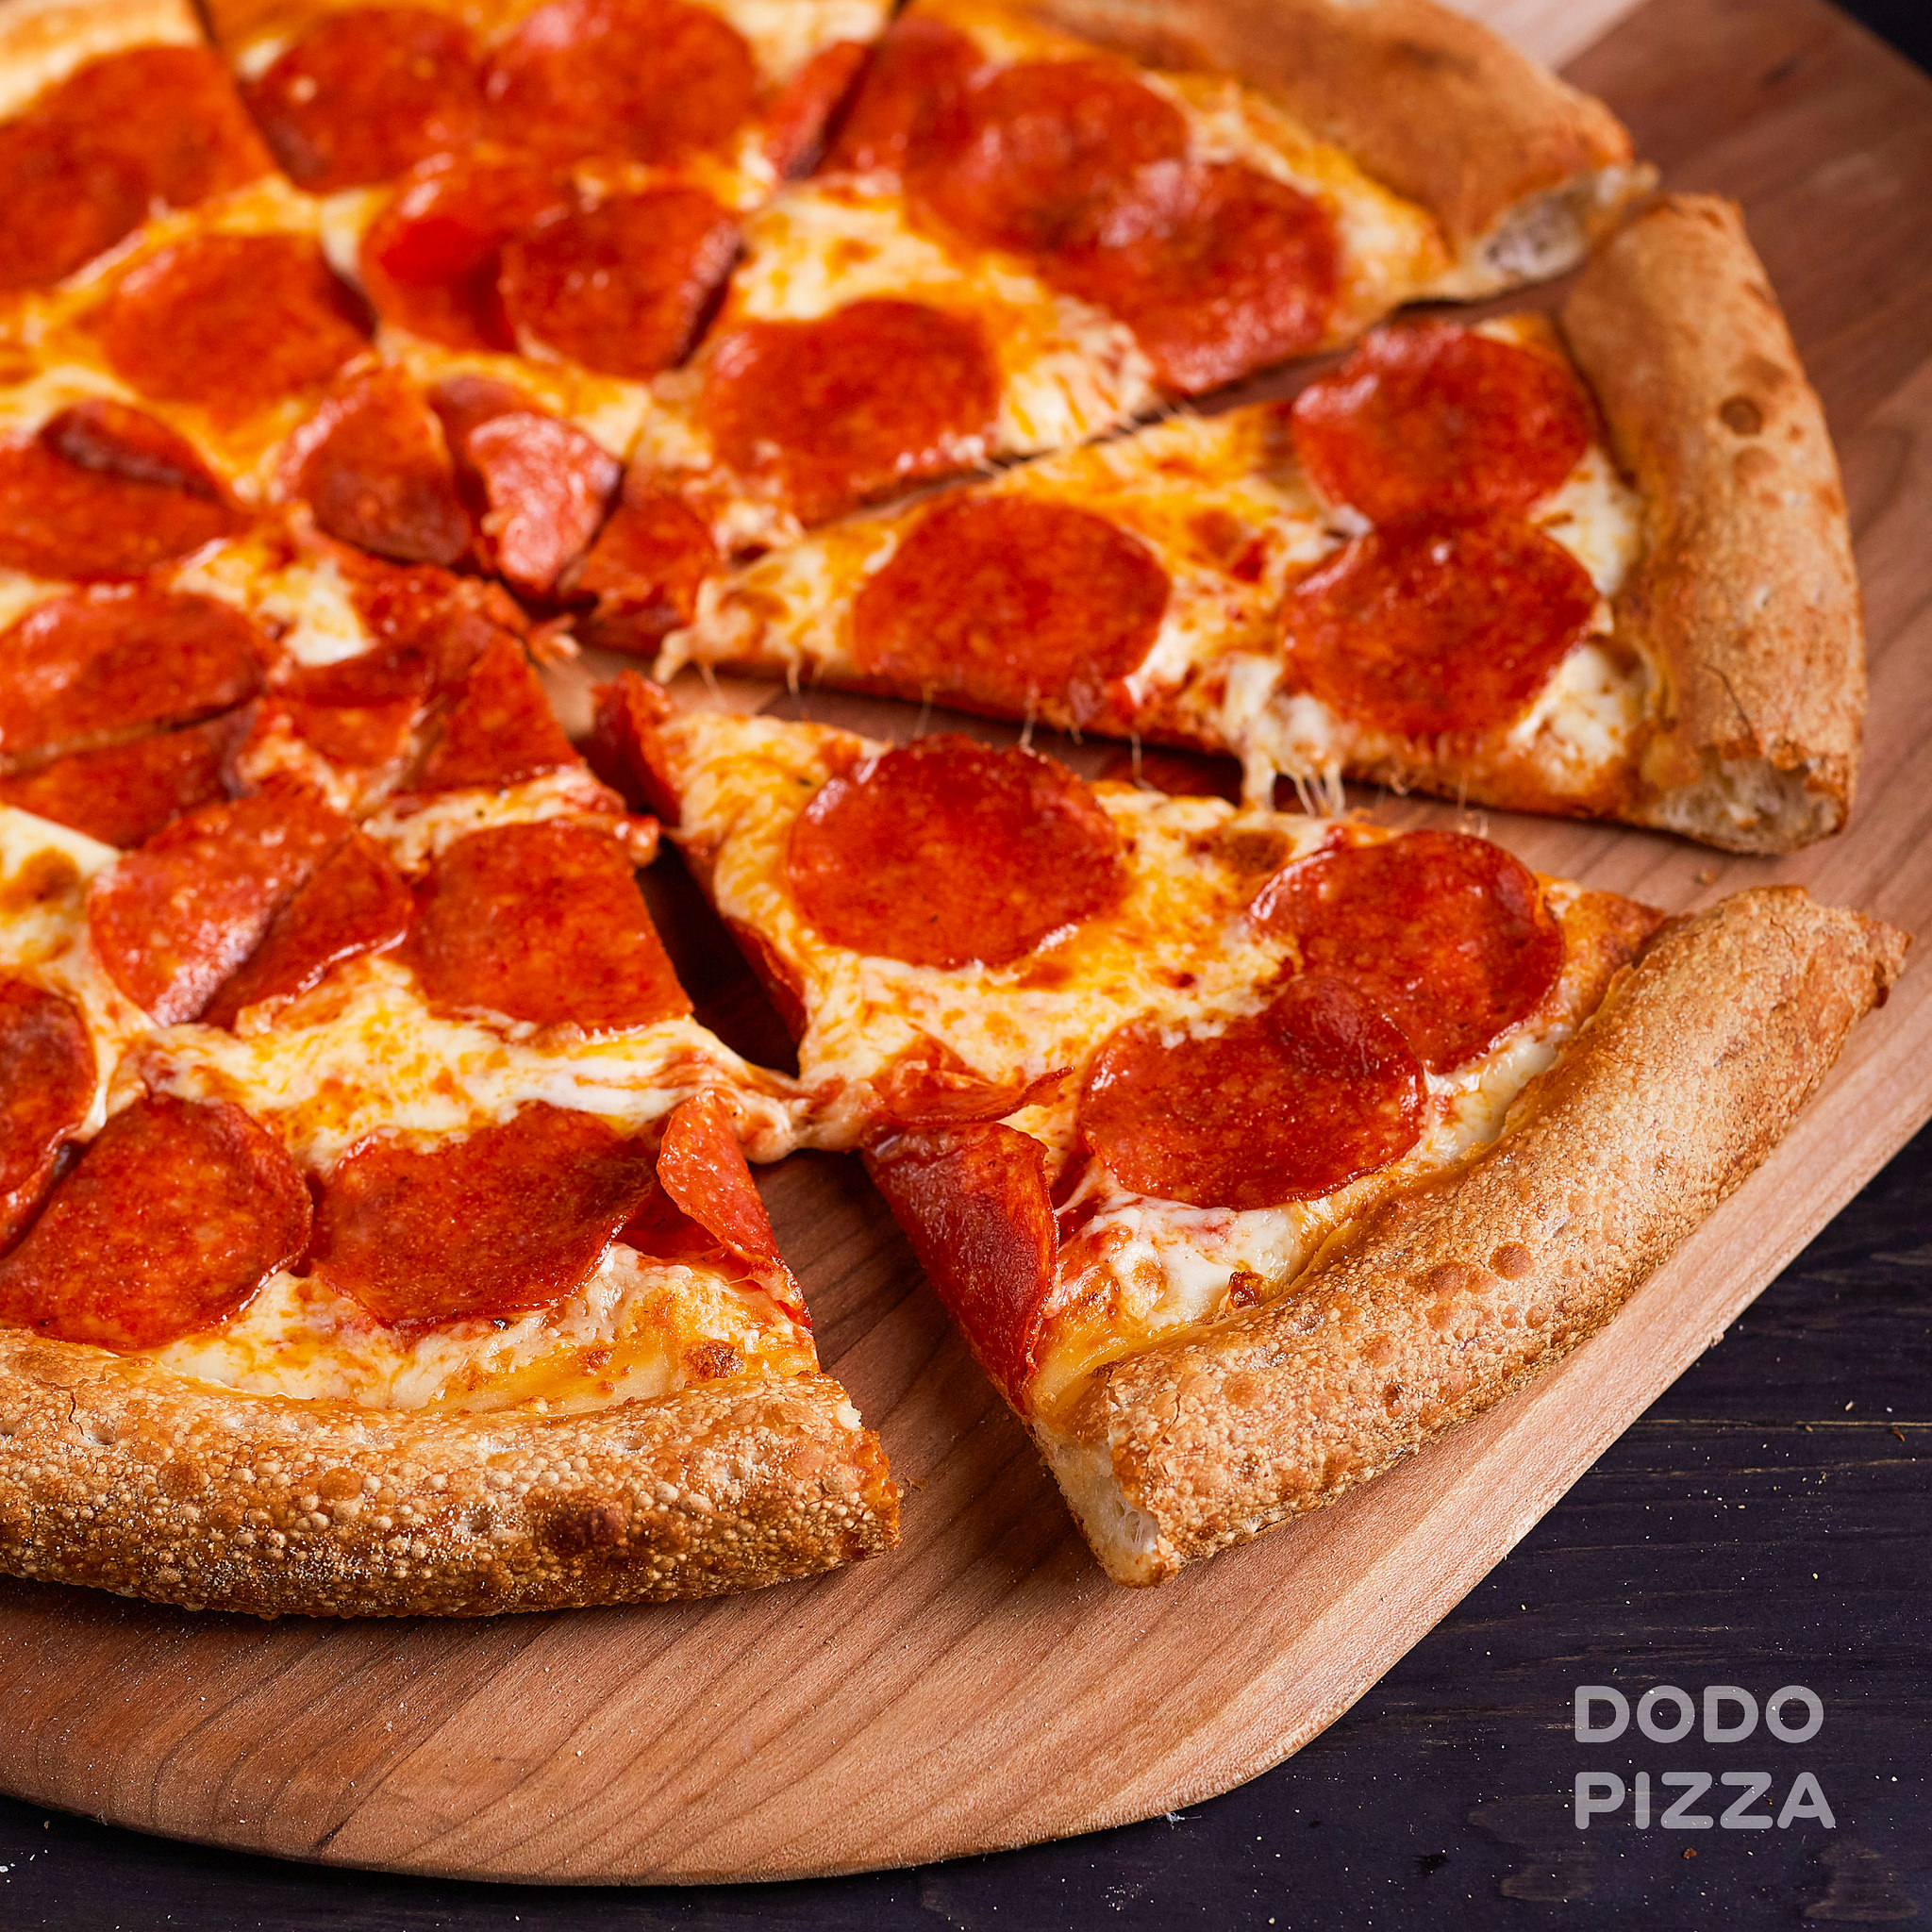 сколько стоит пицца пепперони в додо пицце фото 2